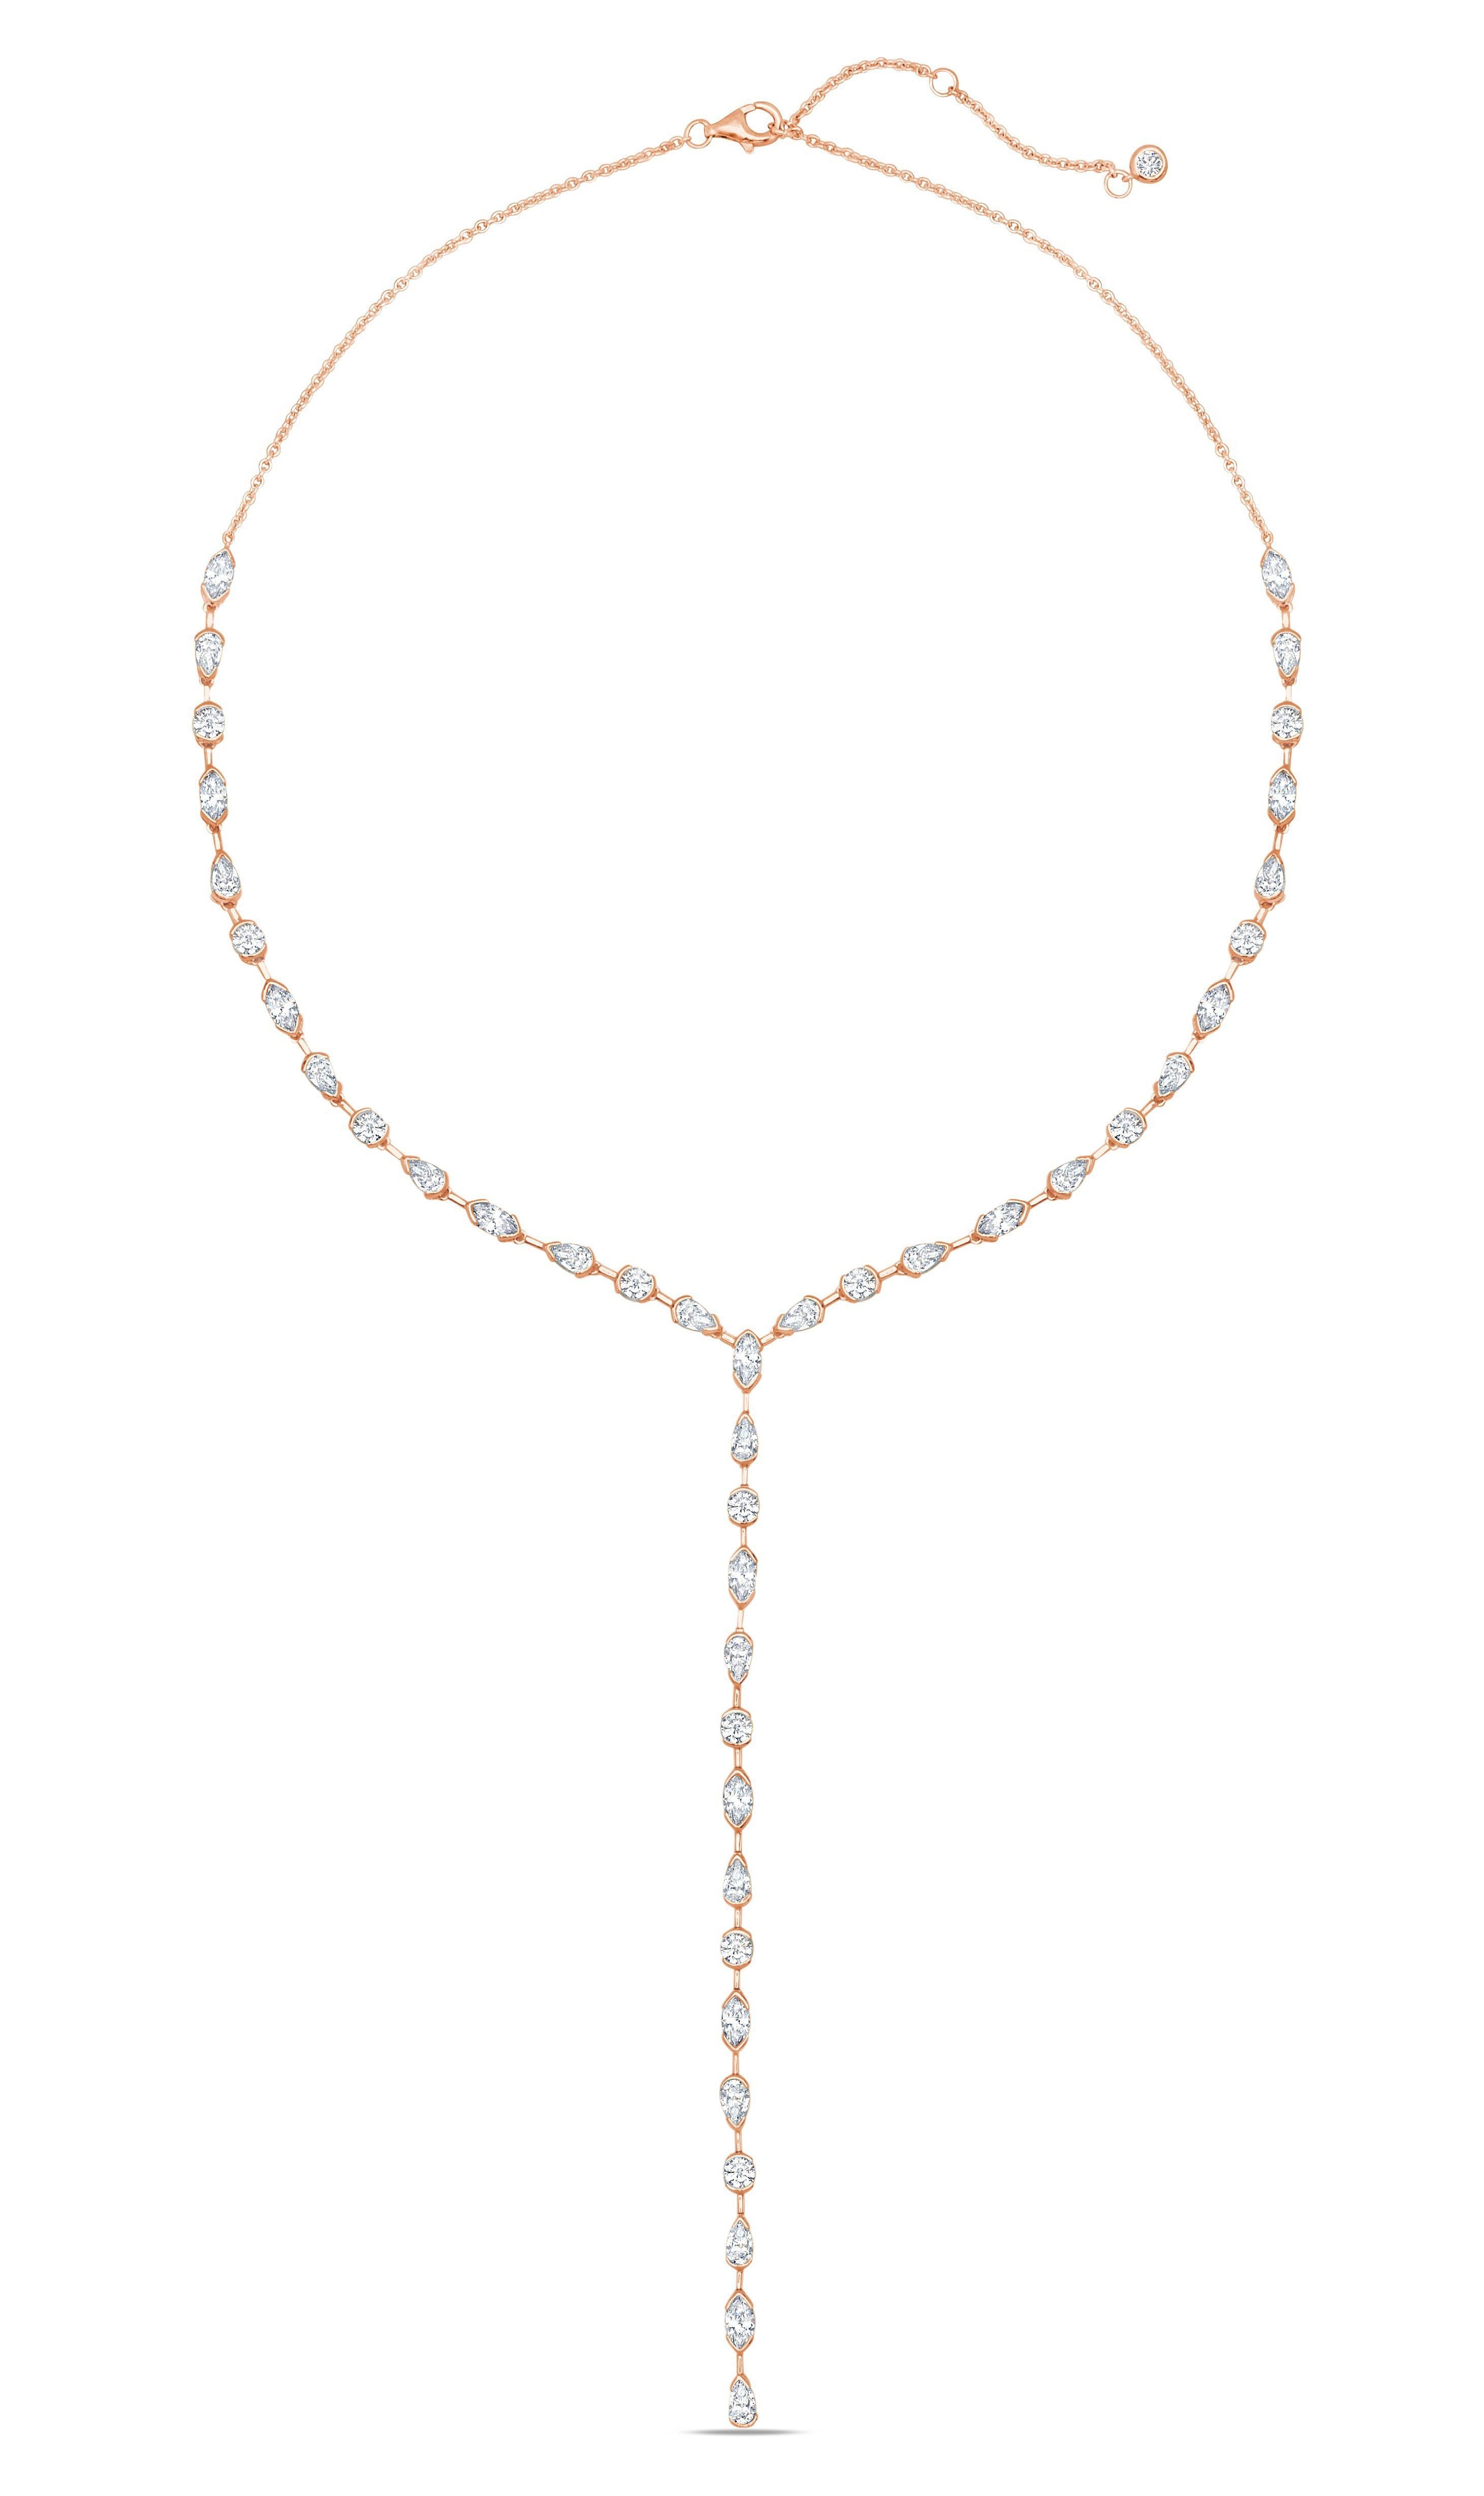 Crislu Jewelry Crislu Lavish Y-Shaped CZ Necklace Finished in 18kt Rose Gold